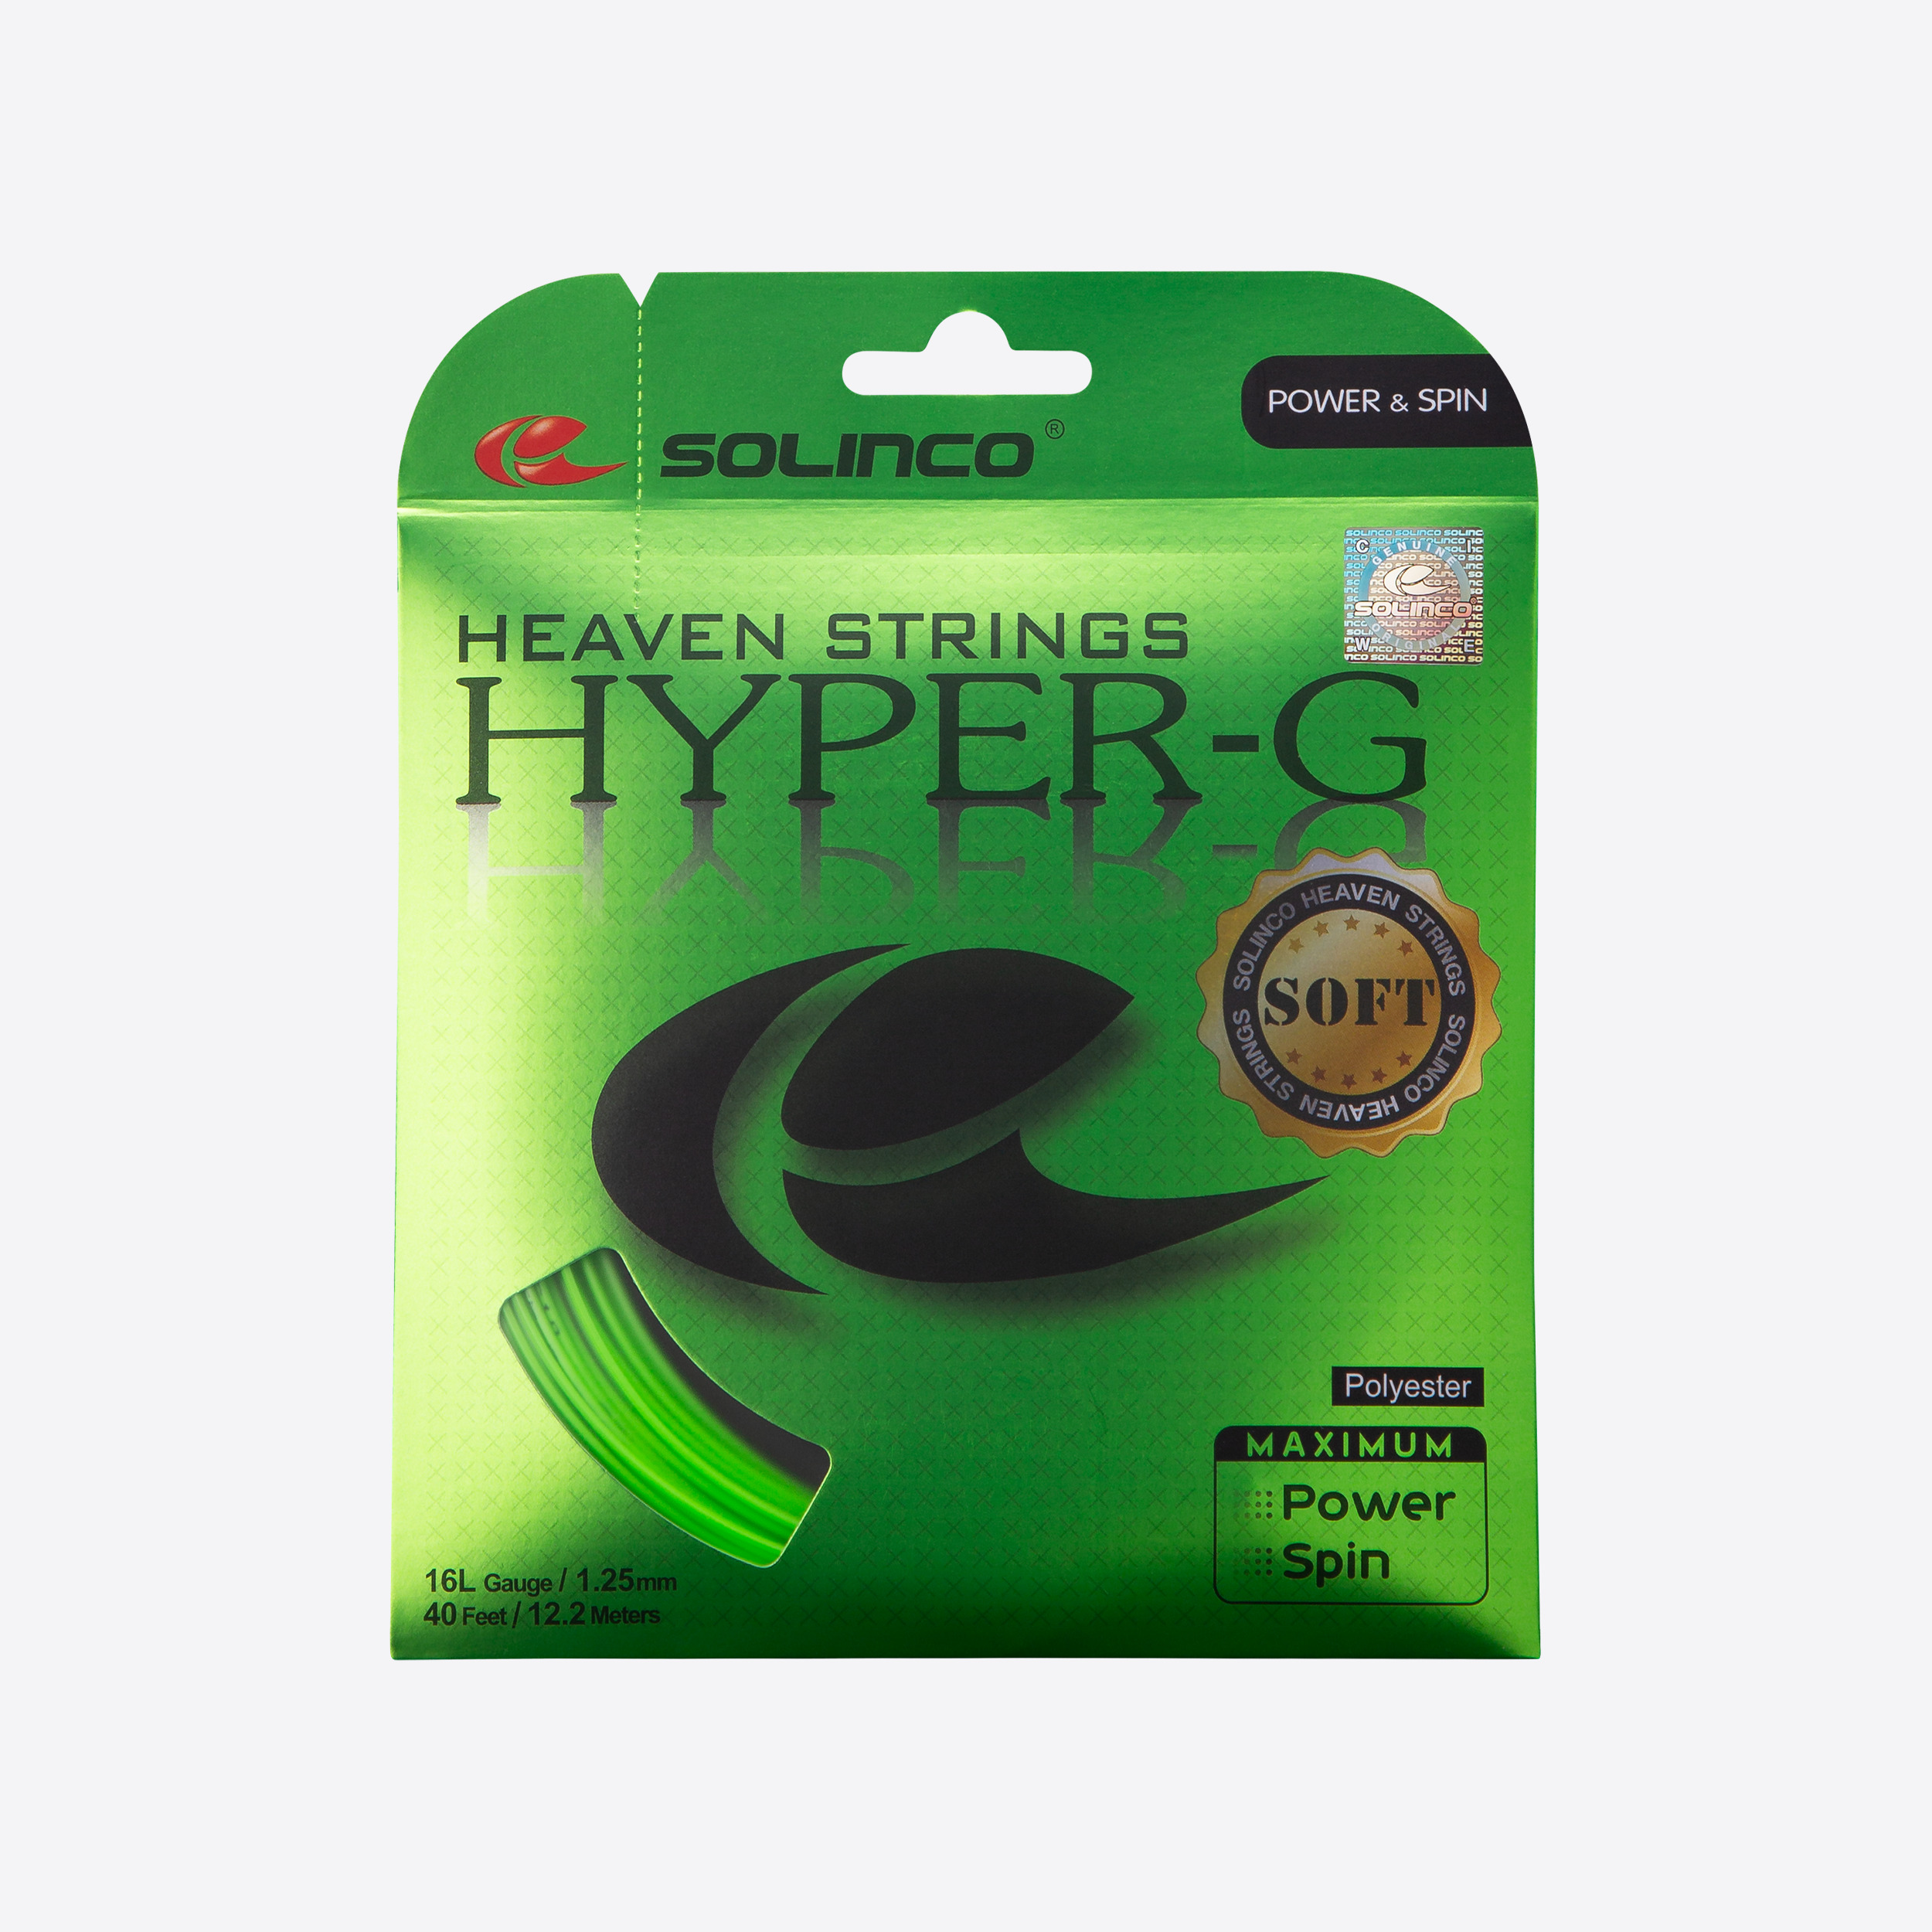 SOLINCO Hyper G Soft Tennis String Reel (16/1.25mm, 200 m)